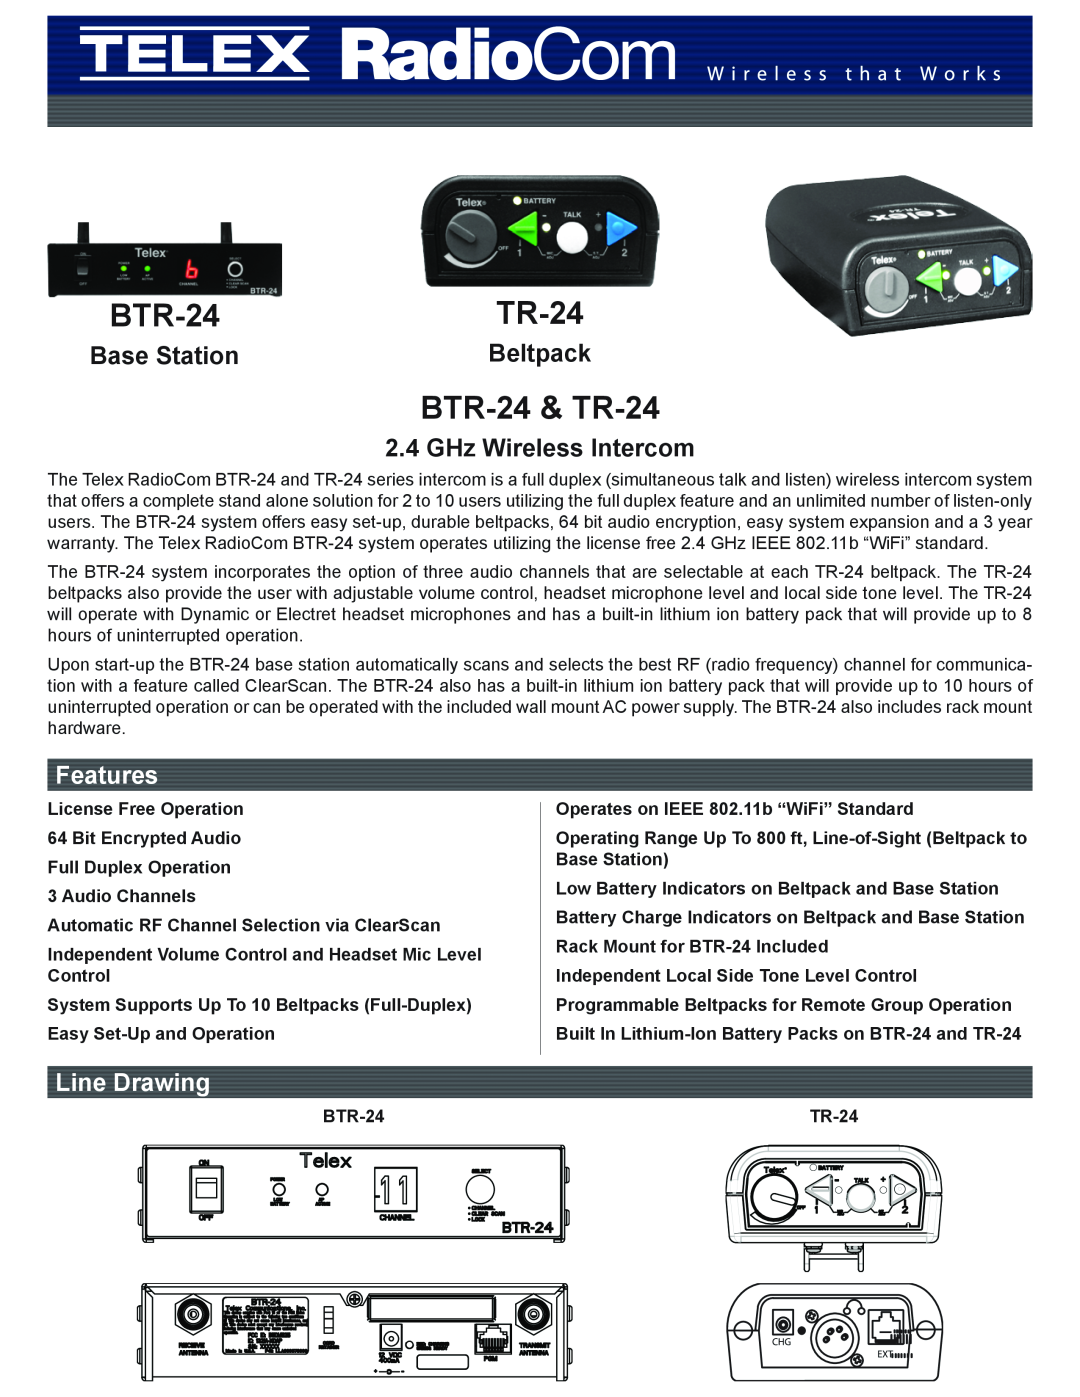 Telex warranty BTR-24 & TR-24, Features, Line Drawing, Base Station, Beltpack, GHz Wireless Intercom 